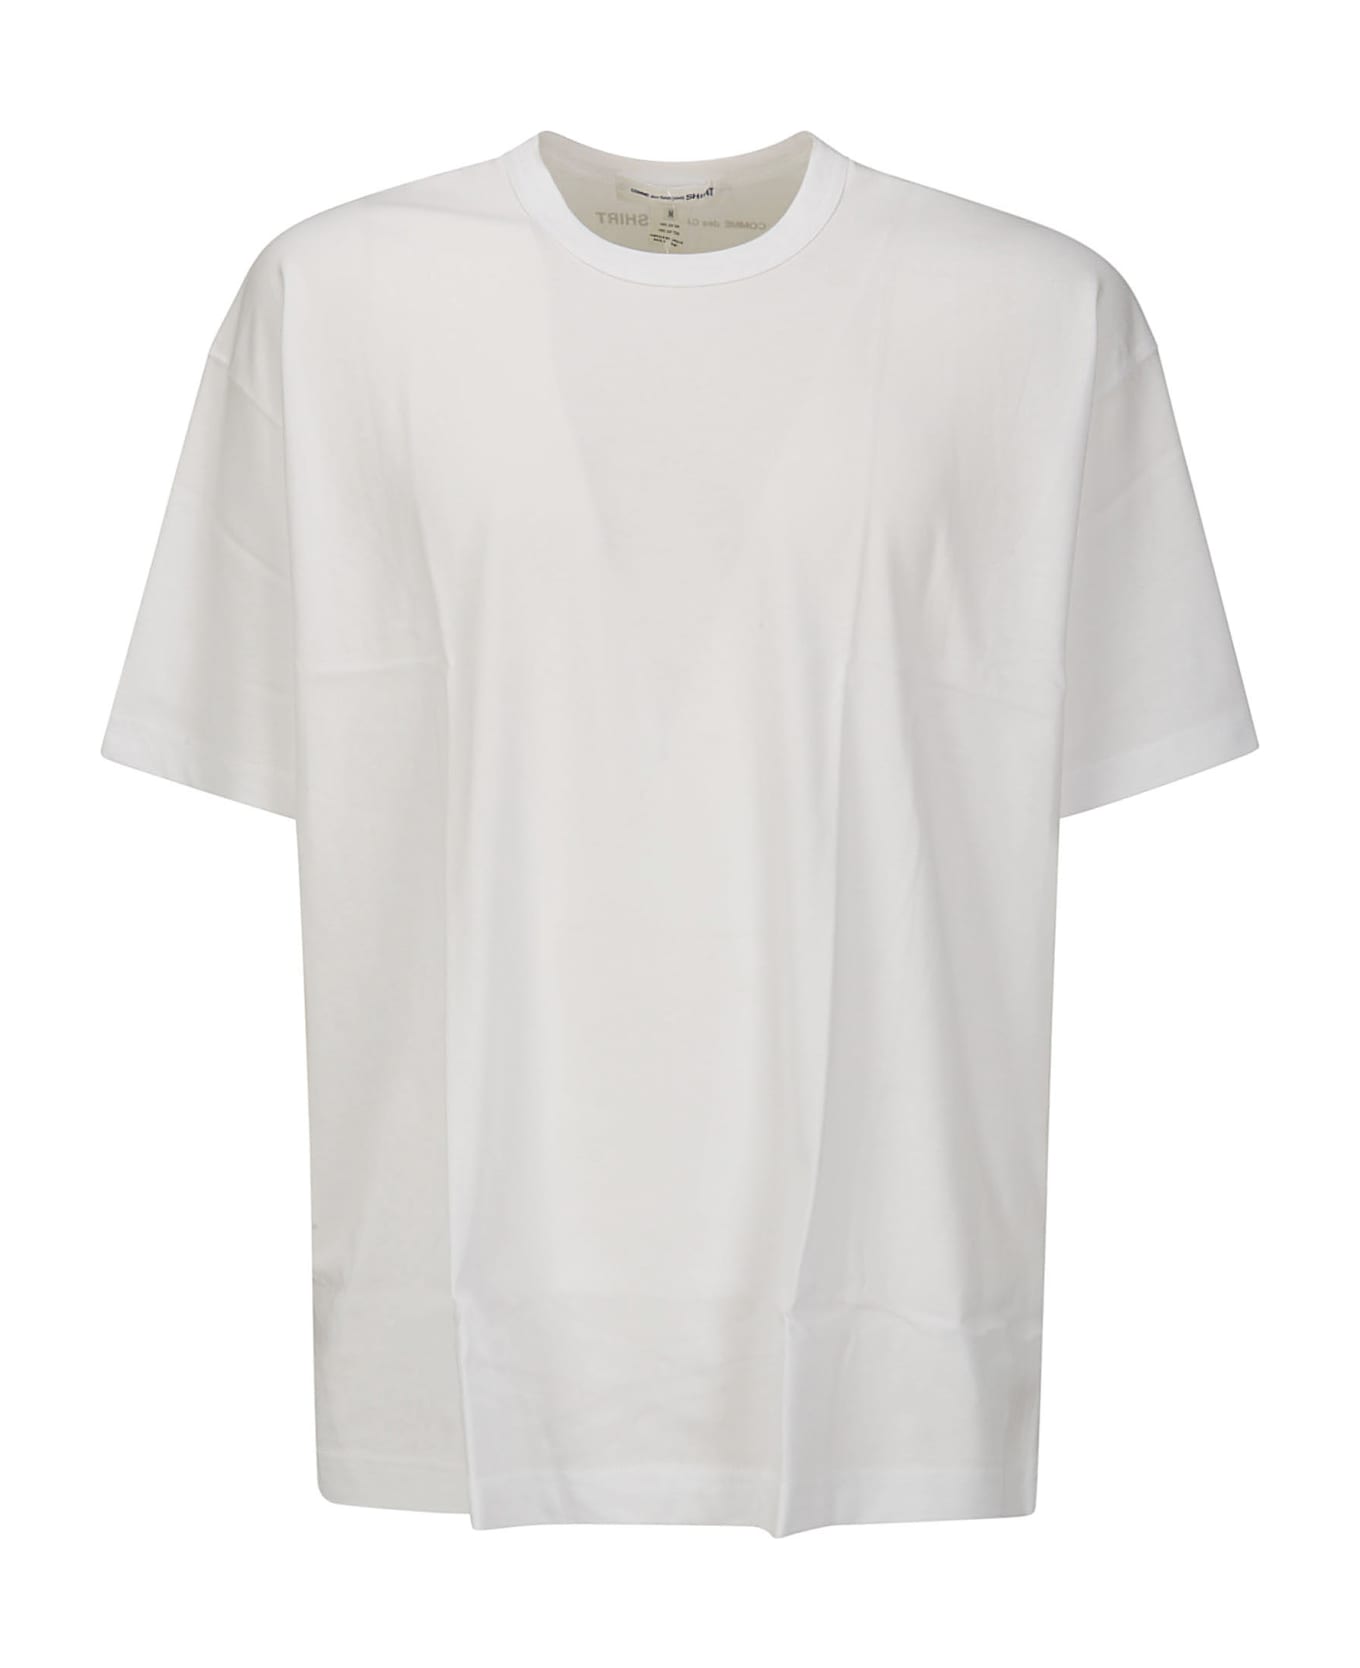 Comme des Garçons Shirt Cotton Jersey Plain With Printed Cdg Shirt L - WHITE シャツ